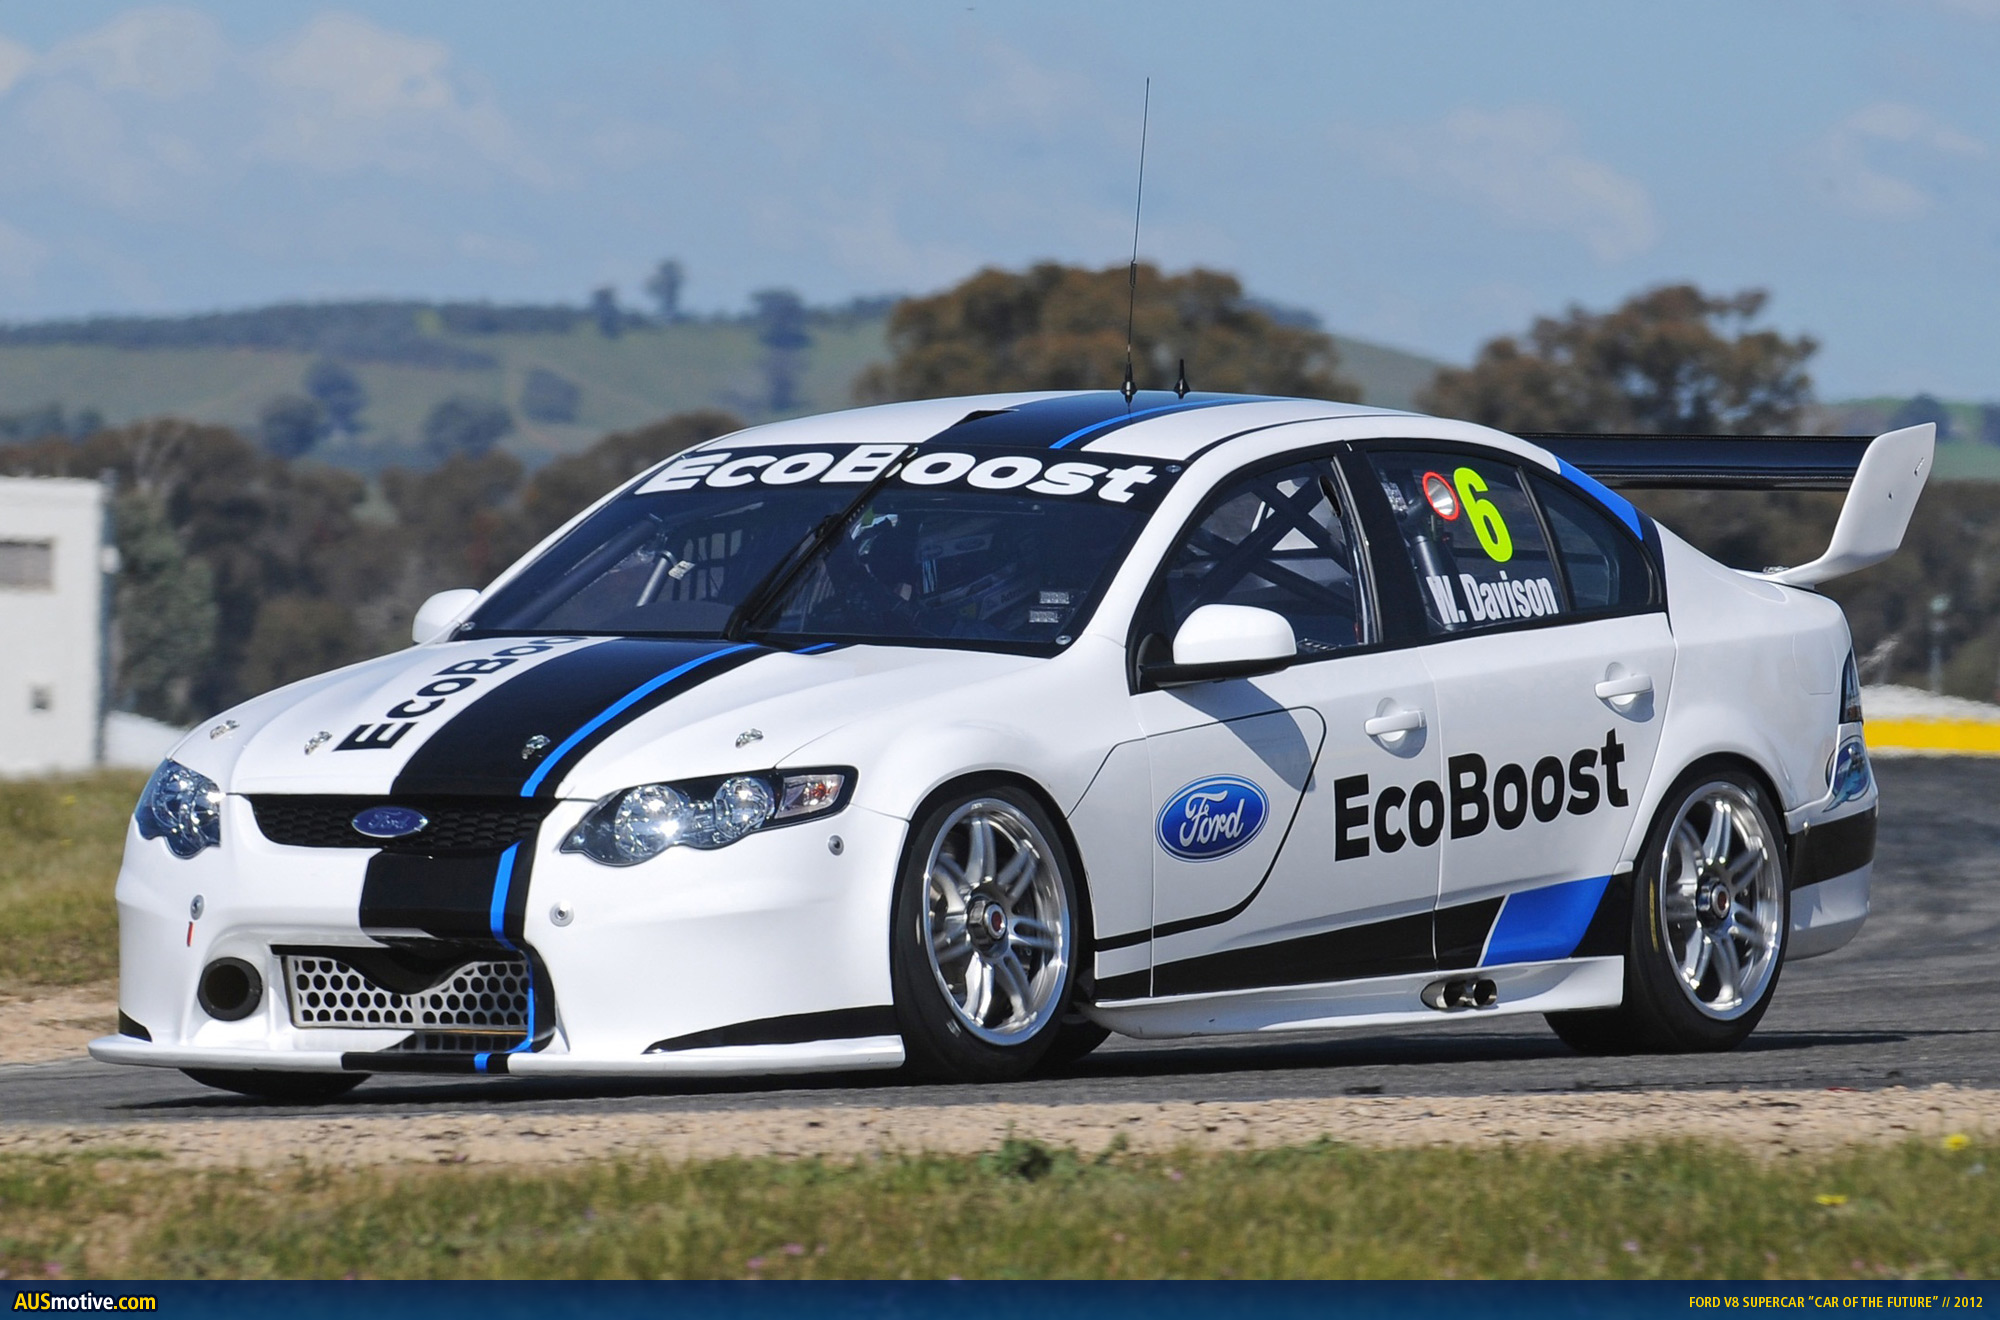 AUSmotive.com » Ford confirms V8 Supercars exit after 2015 season